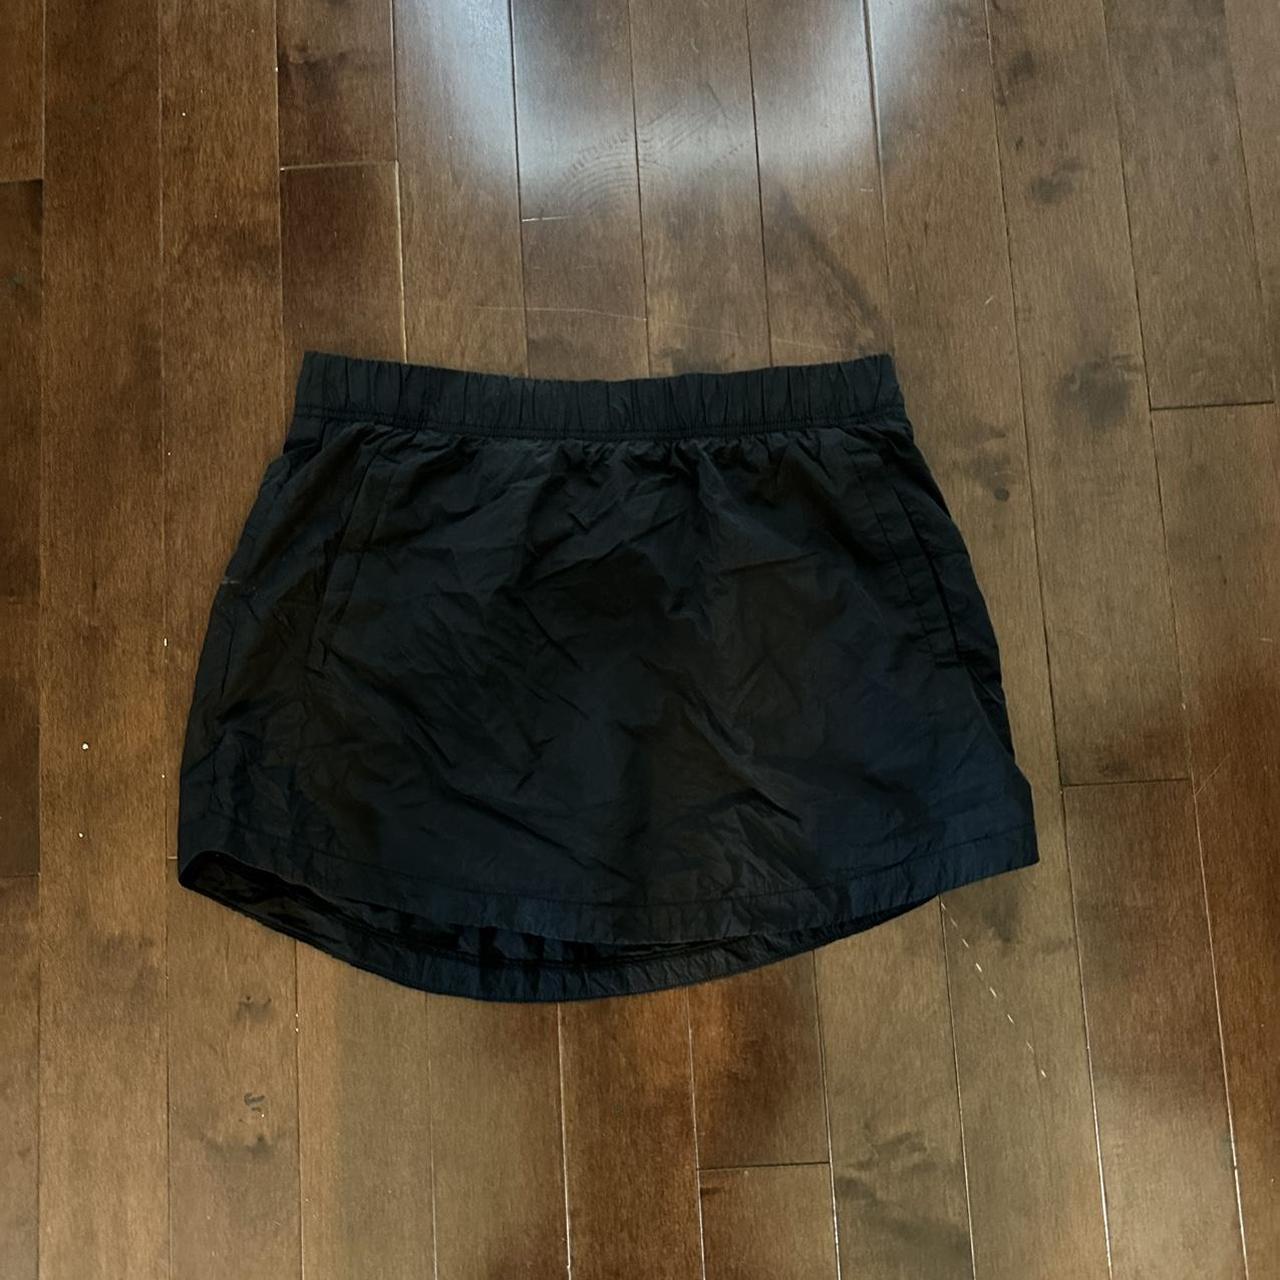 Spider woman's medium activewear skirt with short - Depop